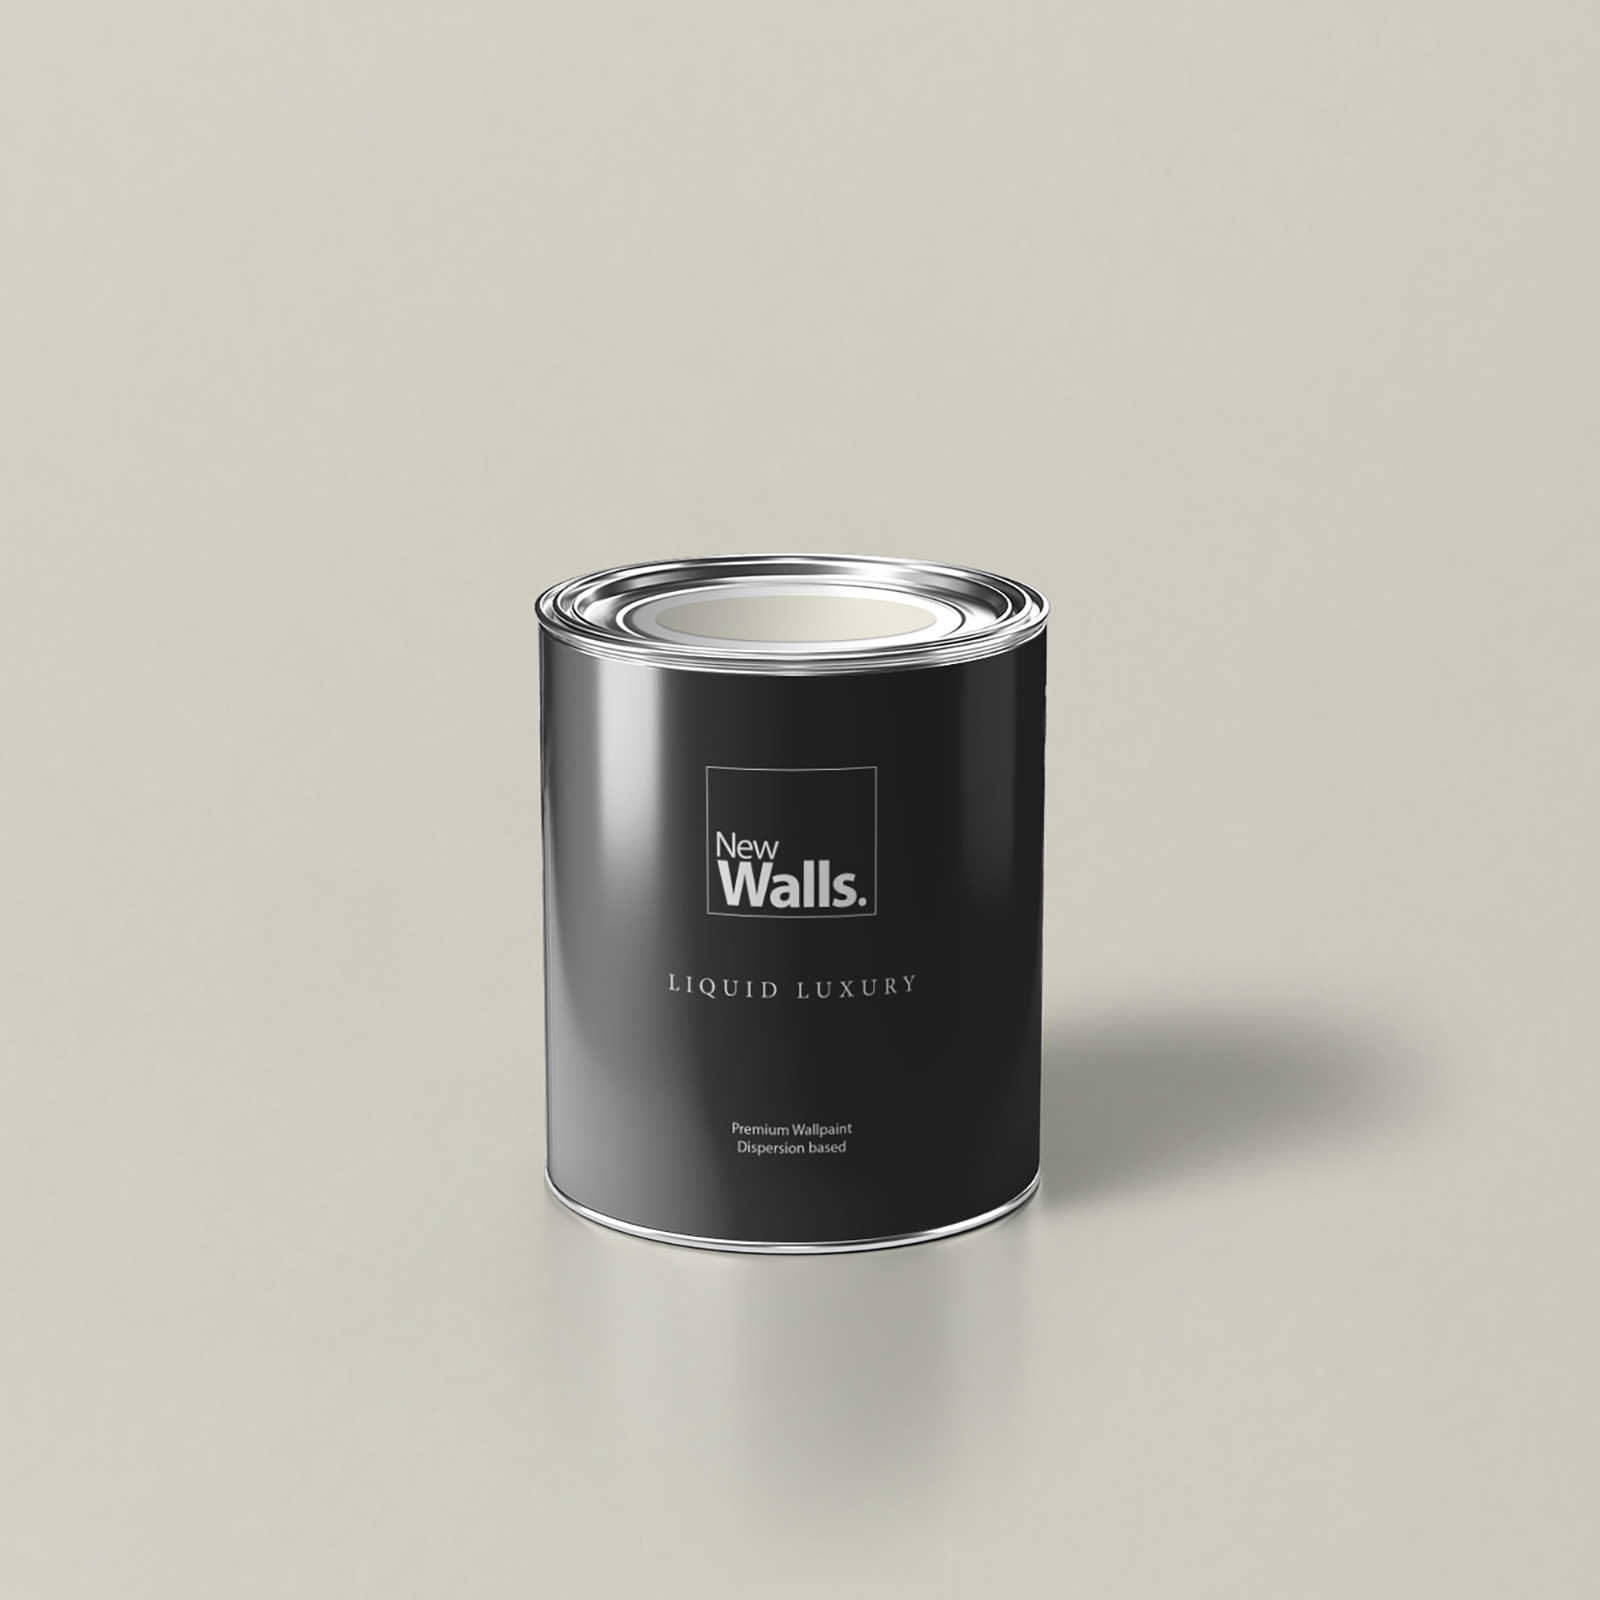         Premium Wall Paint Plain Sage »Essential Earth« NW707 – 1 litre
    